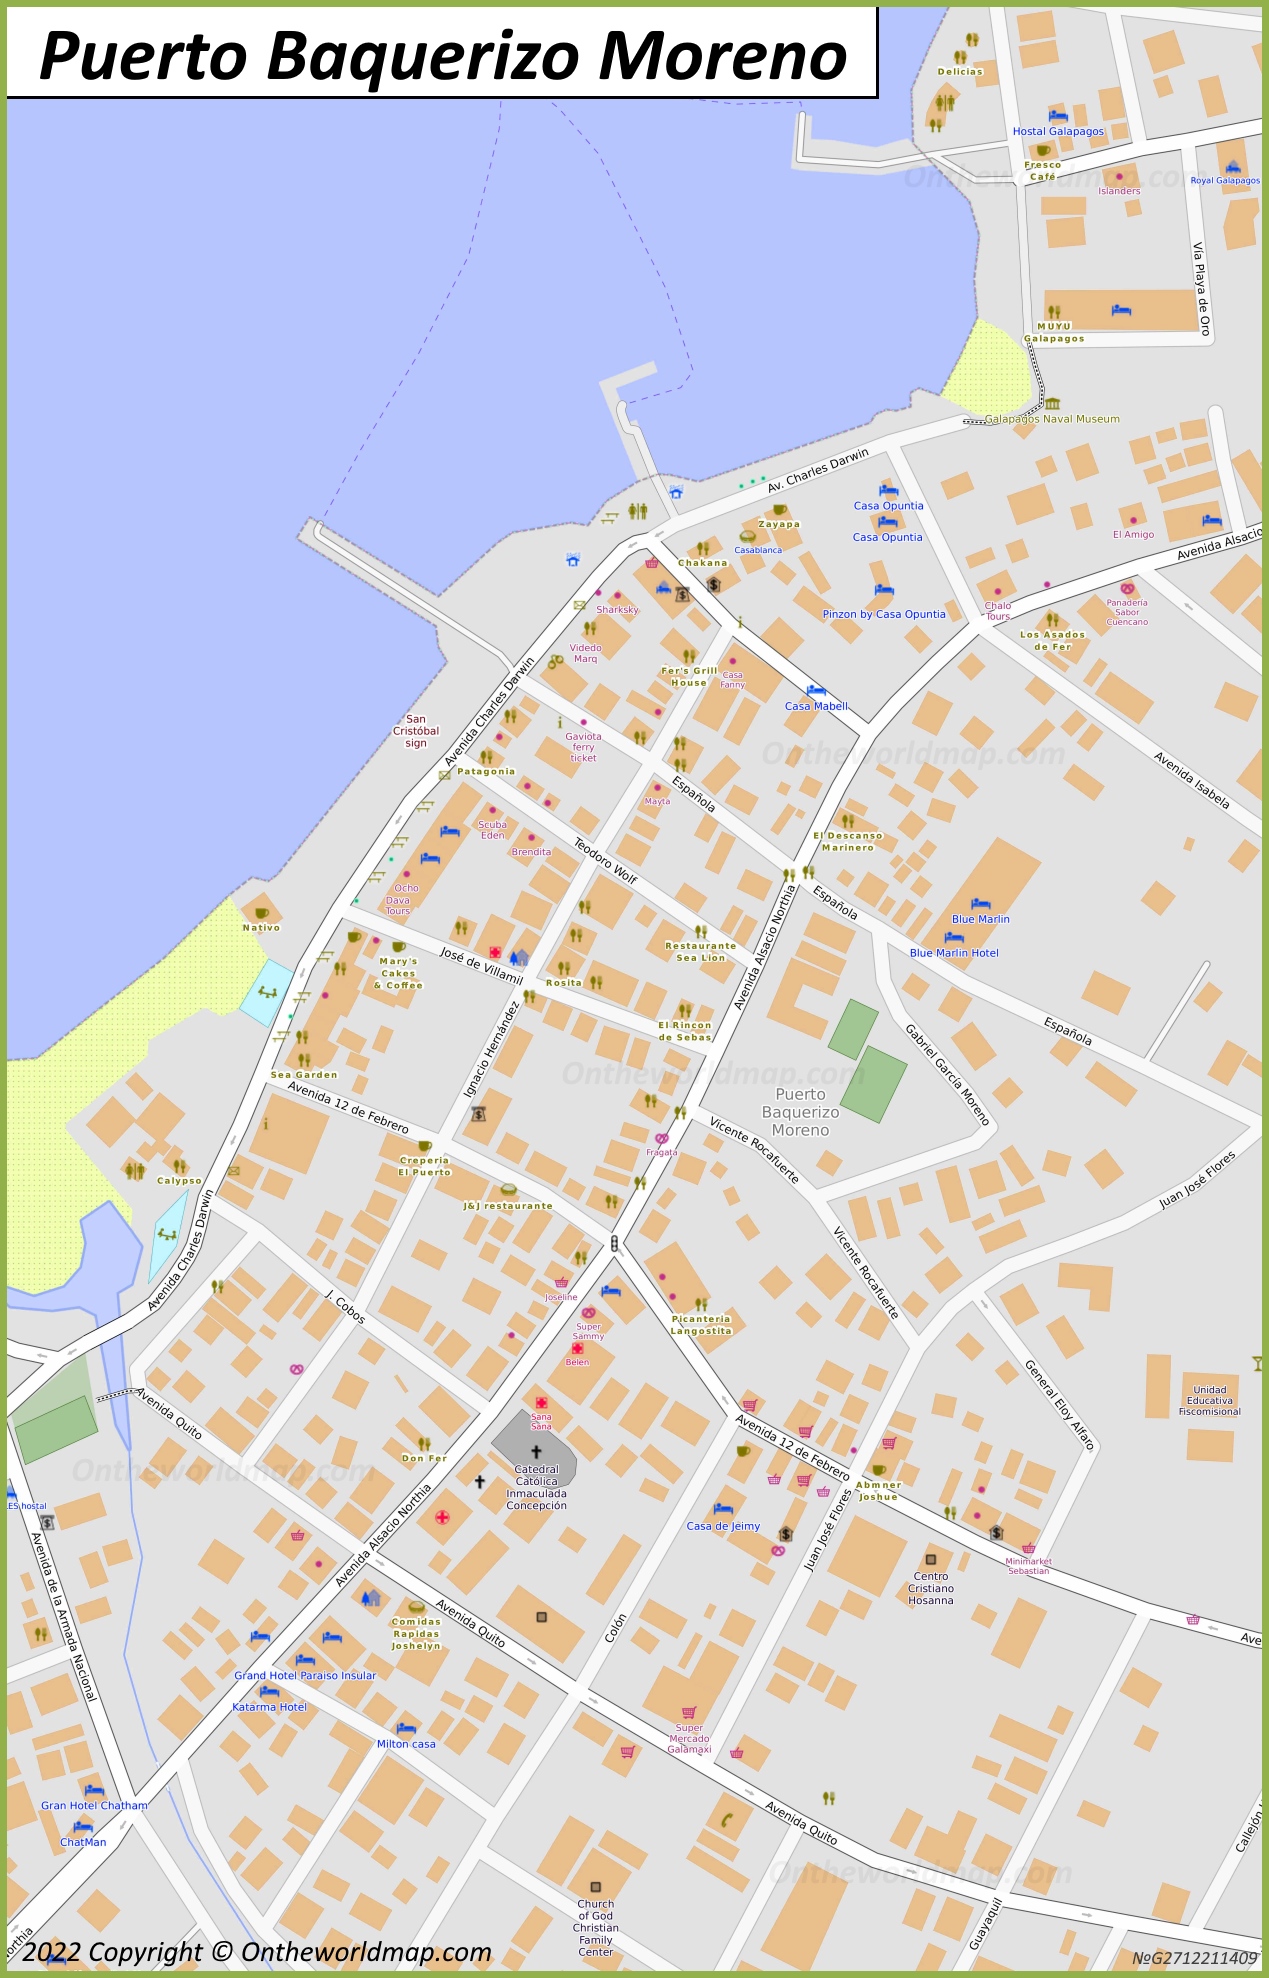 Puerto Baquerizo Moreno Town Centre Map